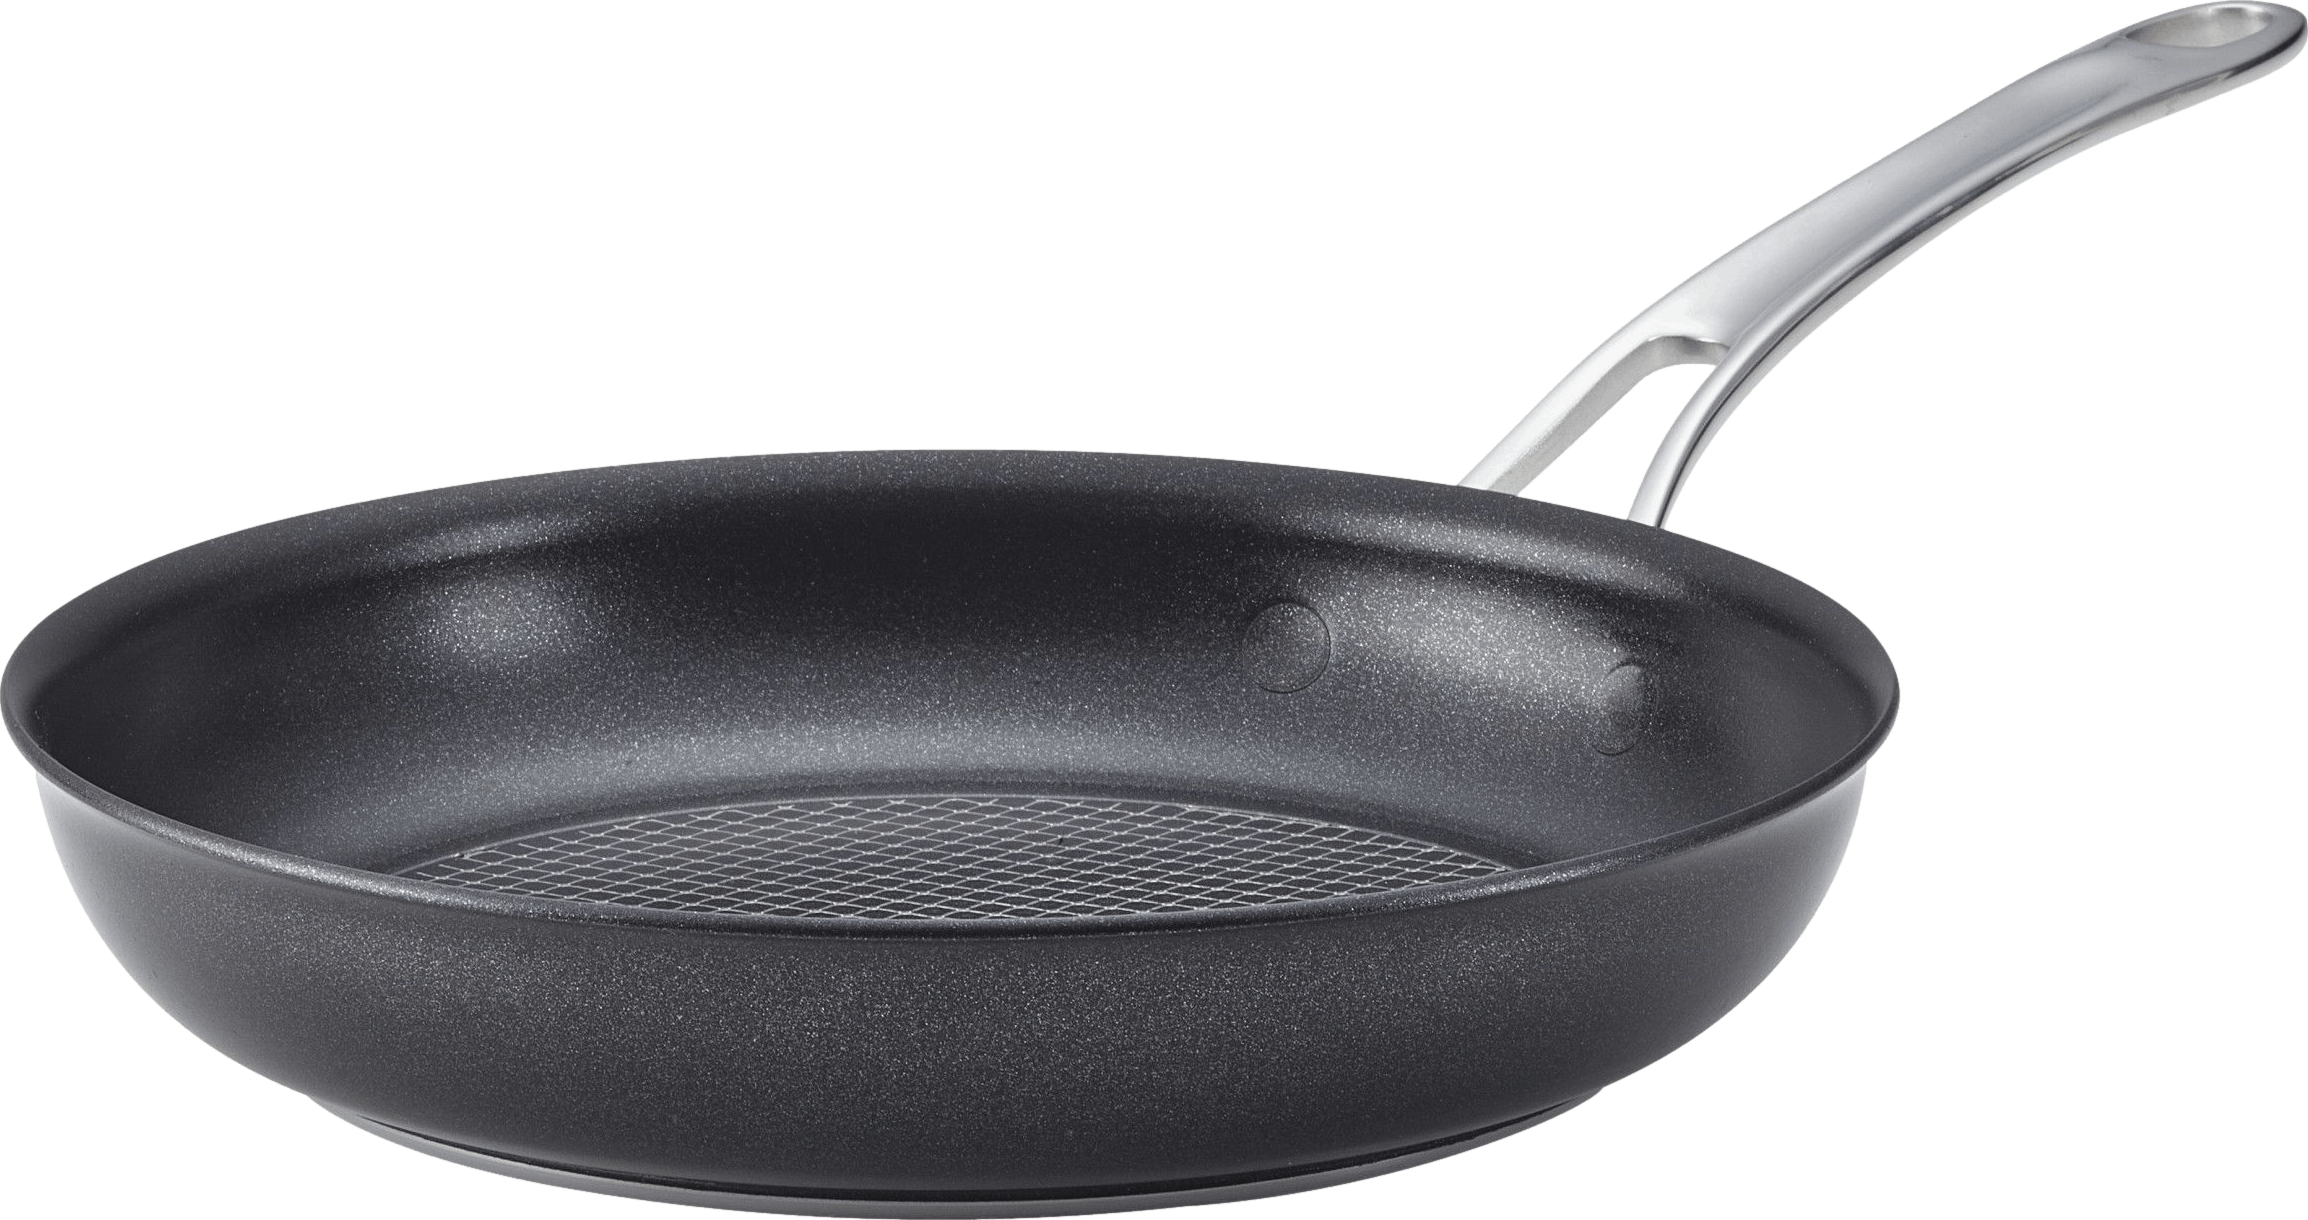 Anolon X Hybrid Nonstick Induction Frying Pan, 10-Inch, Super Dark Gray